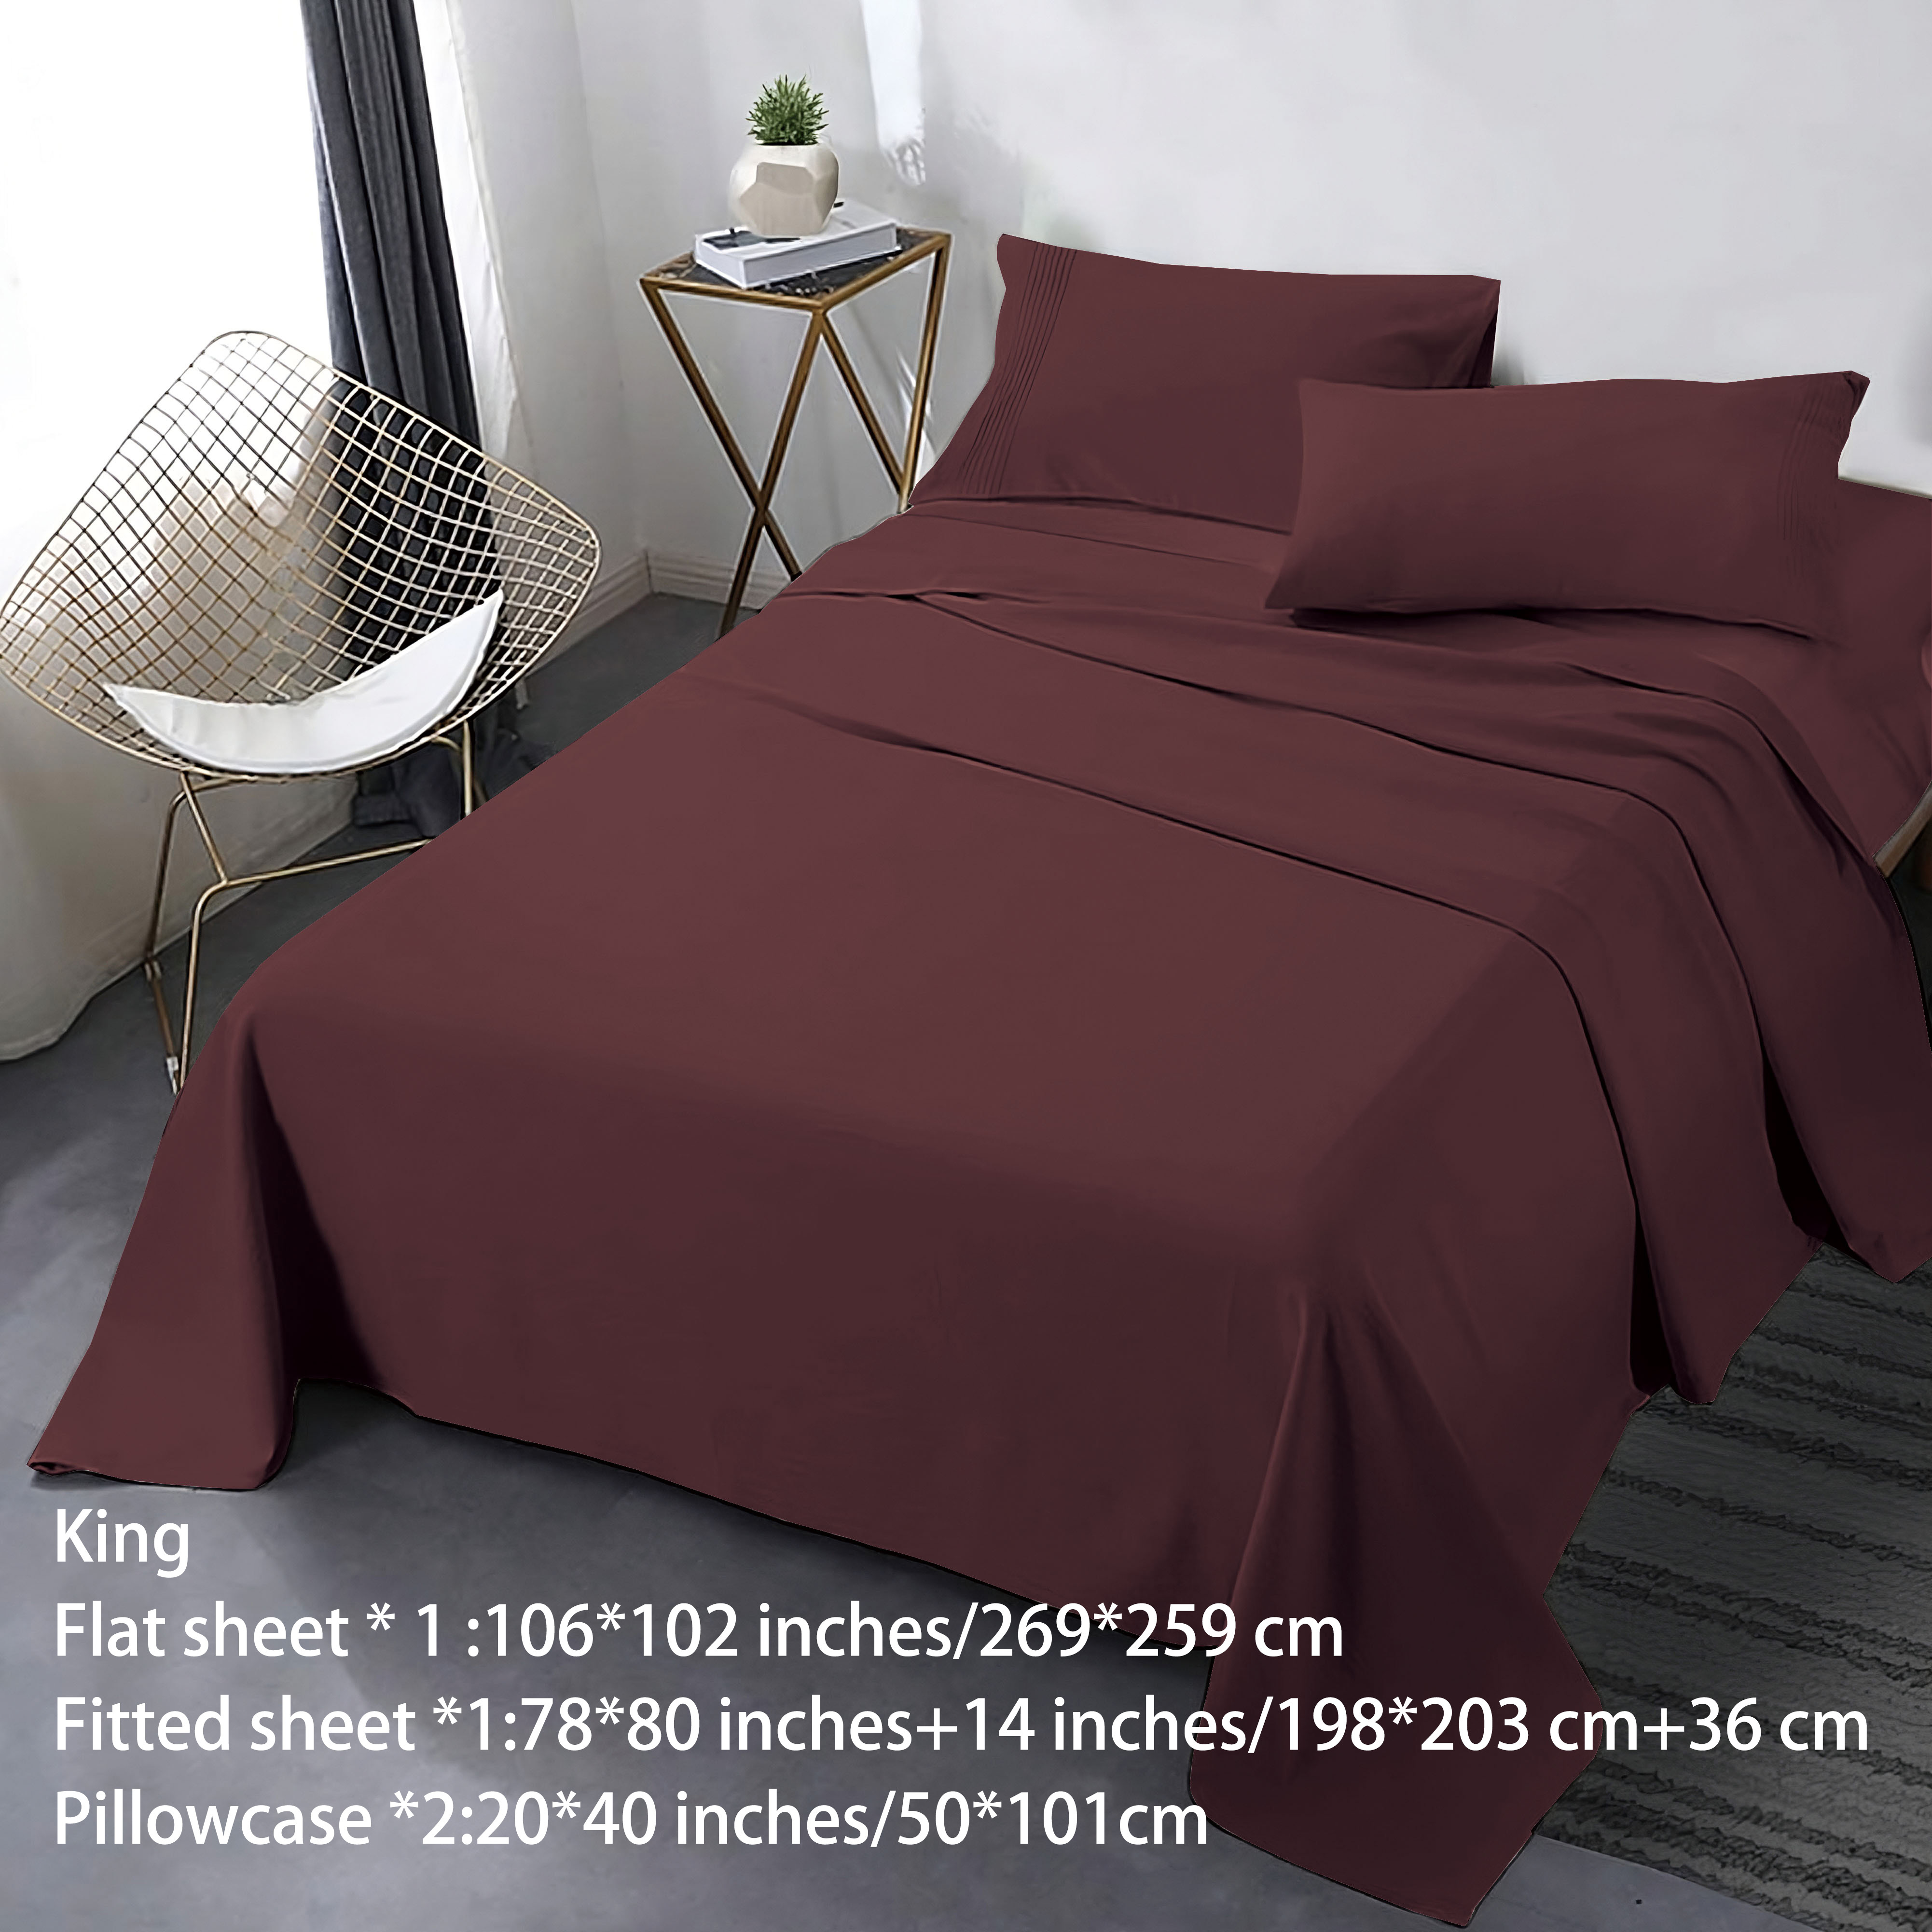 4 Piece Microfiber Bed Sheets Set, King Queen Full Twin Deep pocket fitted  Sheet, Flat Sheet, 2 Pillowcases (Queen,Brown)